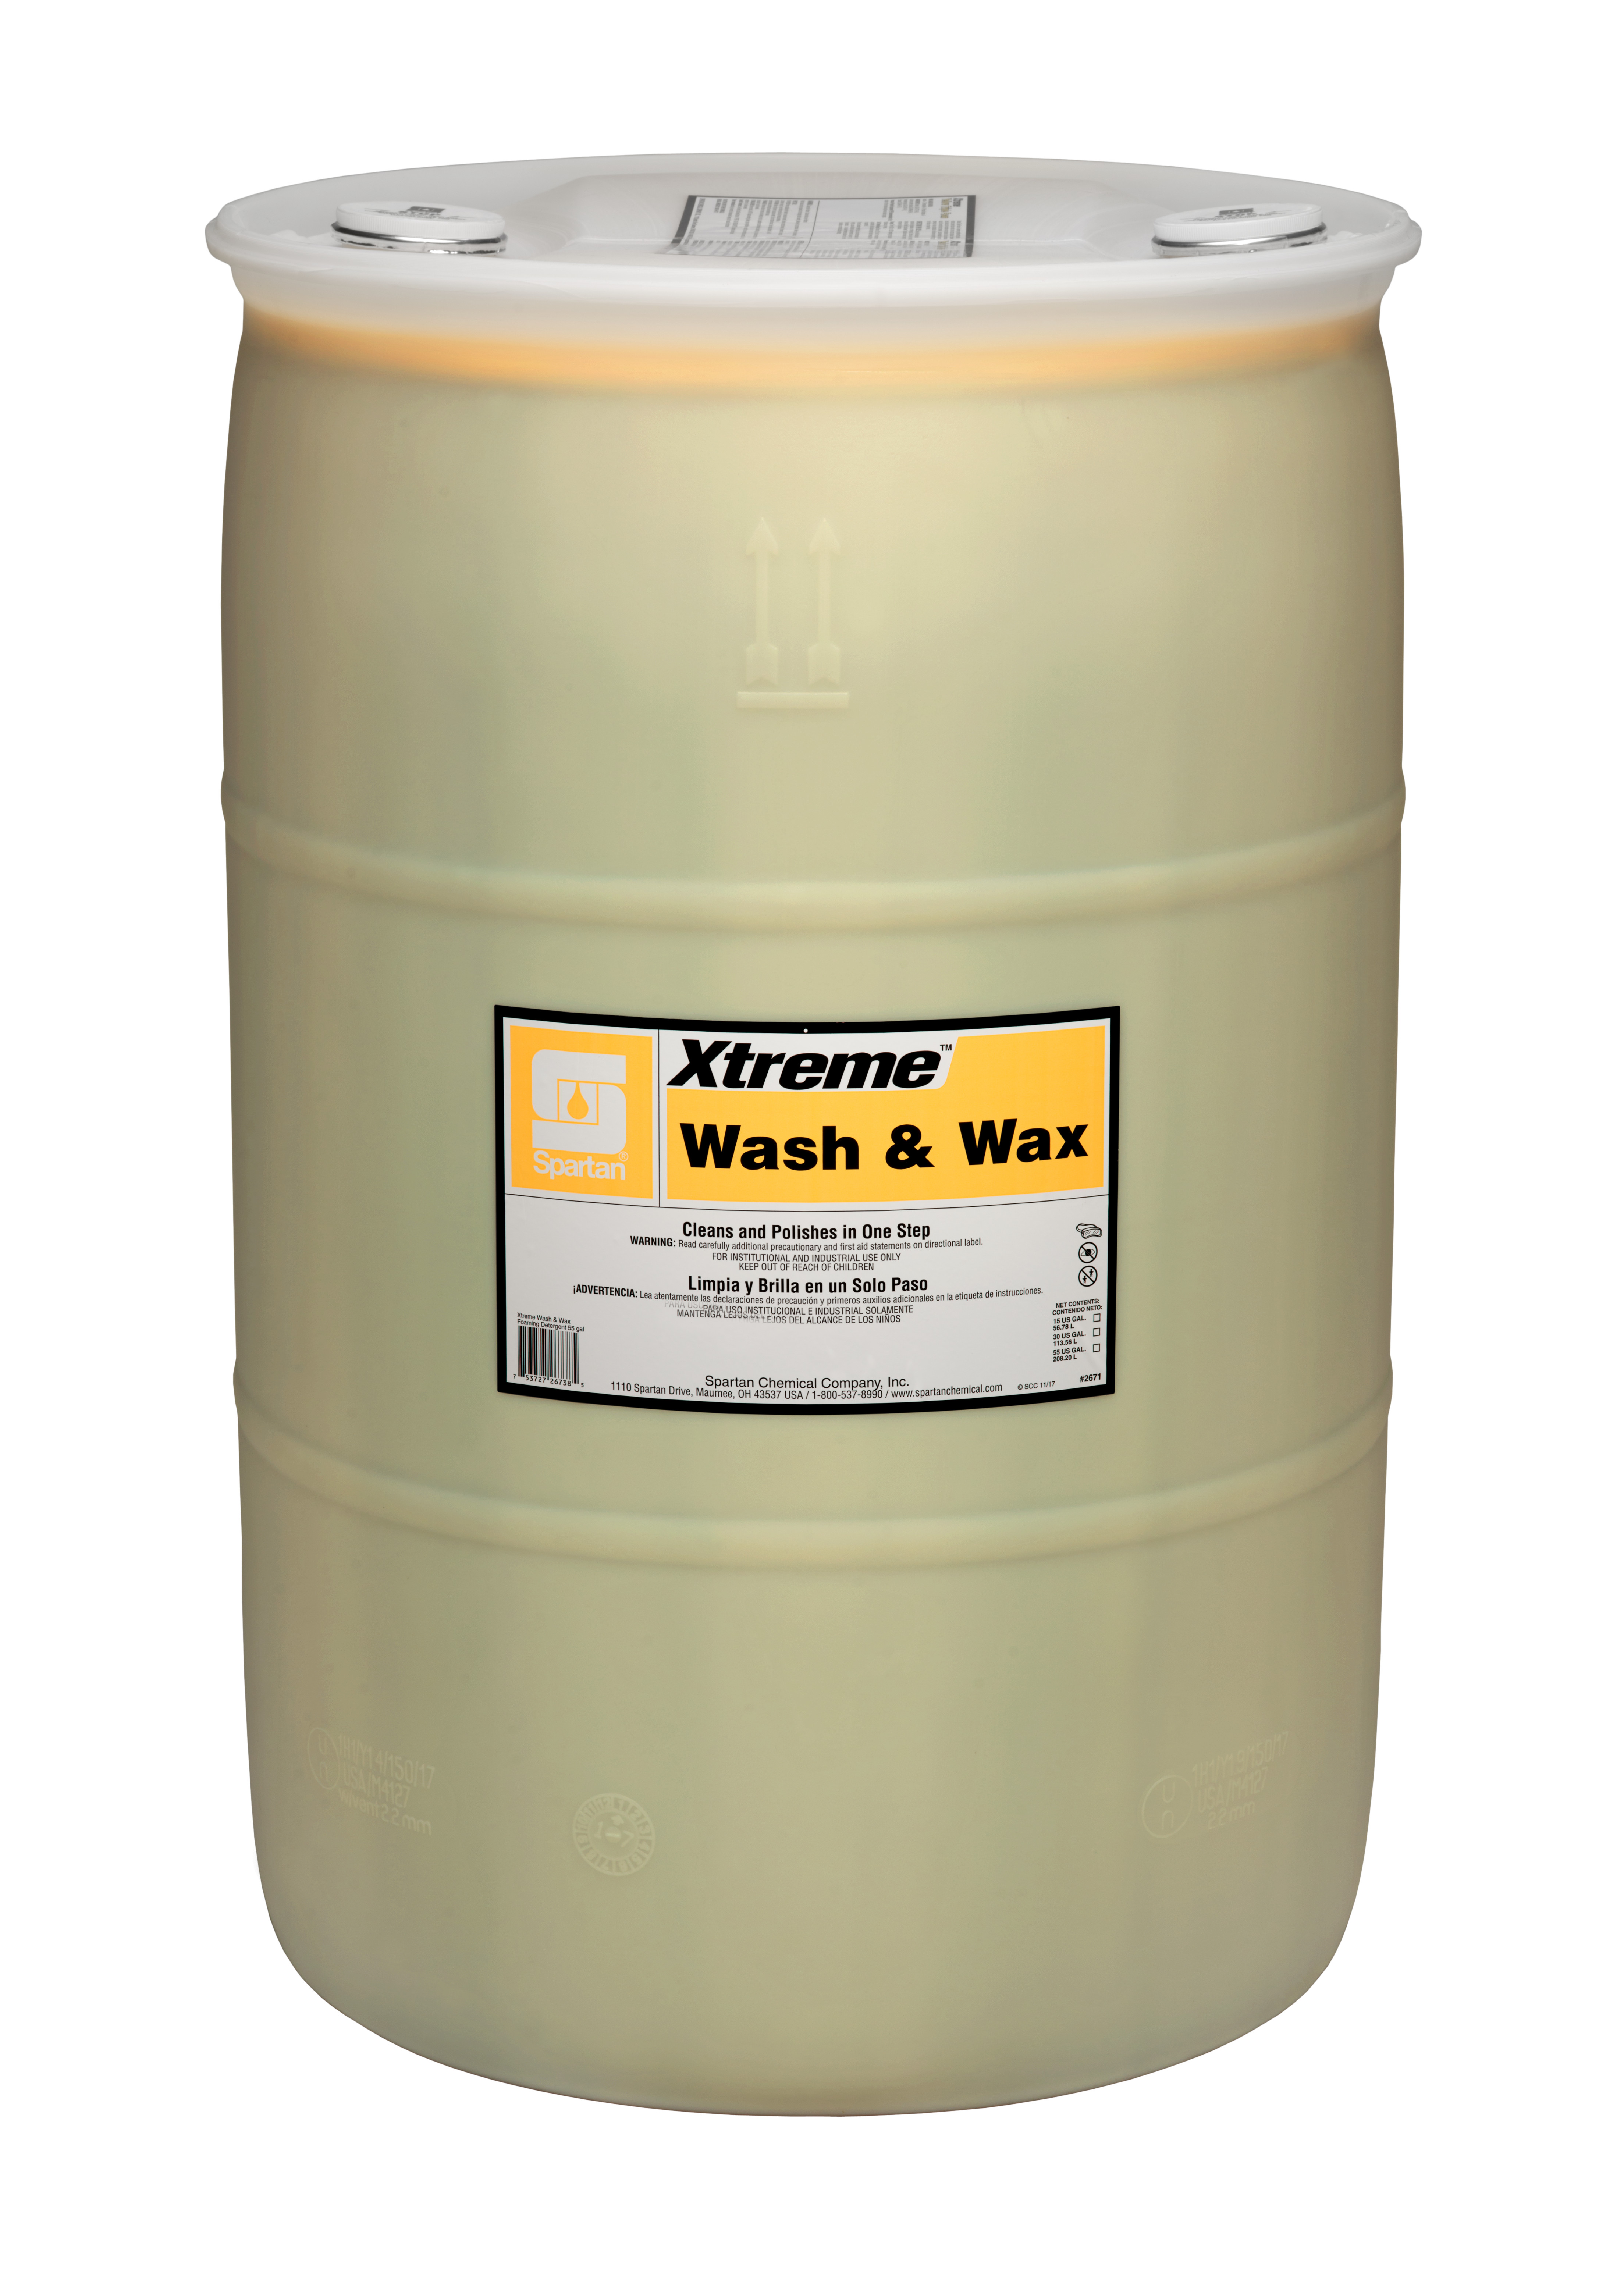 Spartan Chemical Company Xtreme Wash & Wax, 55 GAL DRUM